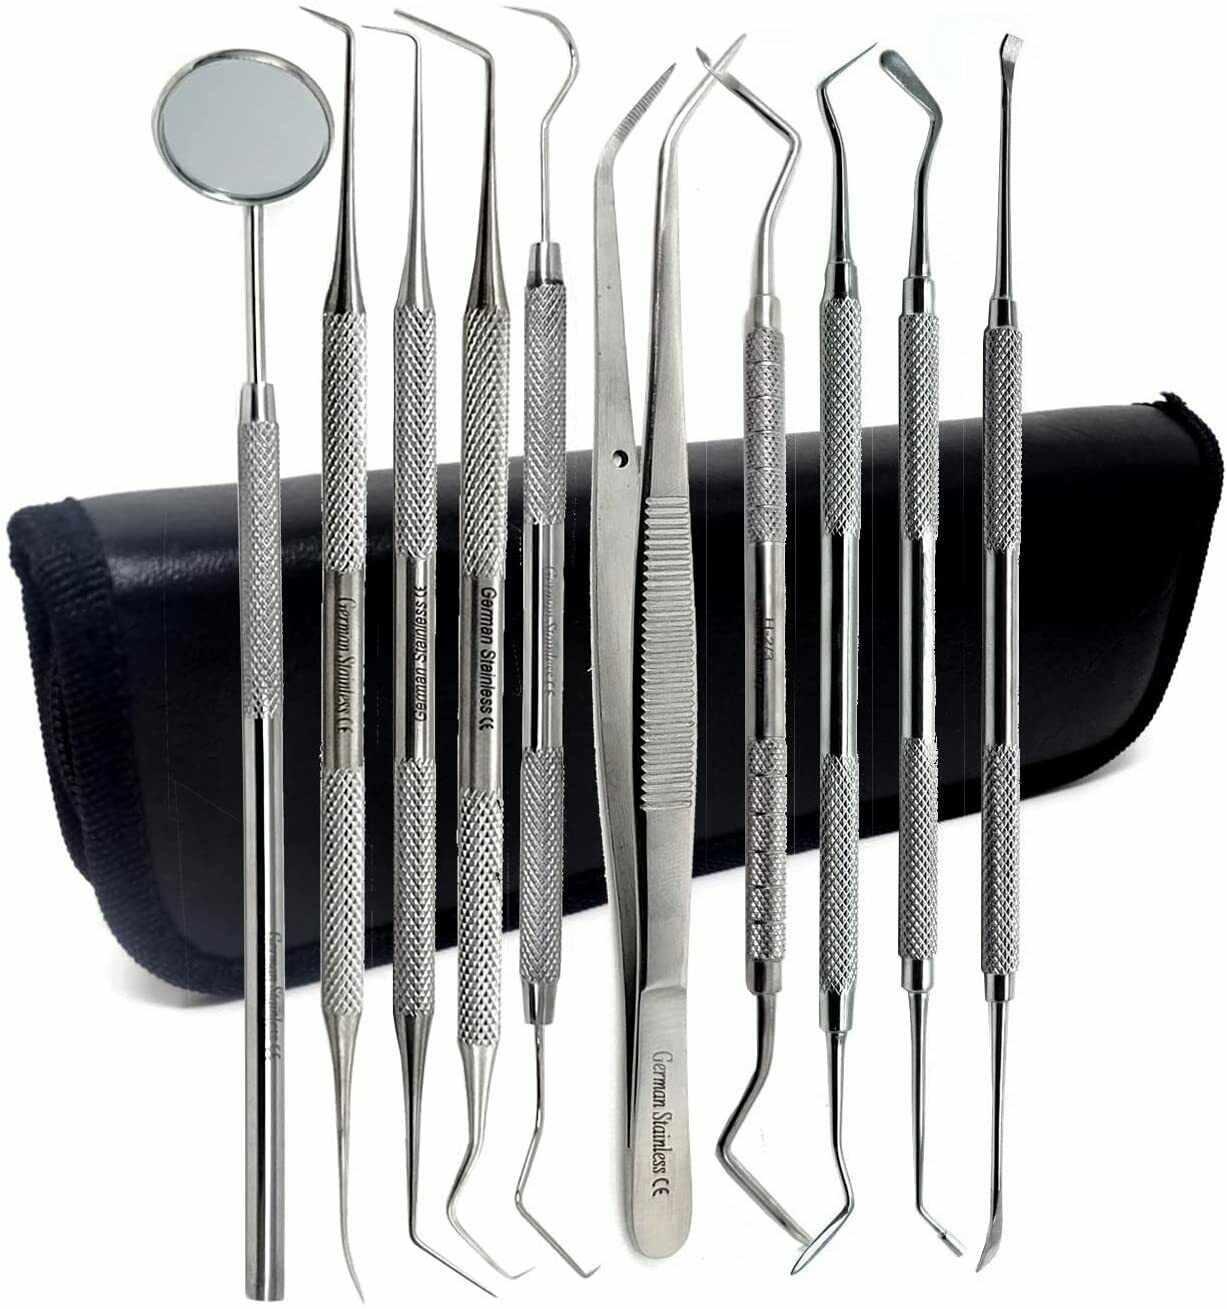 Dental Tools, 6 Pack Teeth Cleaning Tools Stainless Steel Dental Scraper,  Pick Hygiene Set with Mouth Mirror, Tweezer Kit for Dentist, Personal  Using